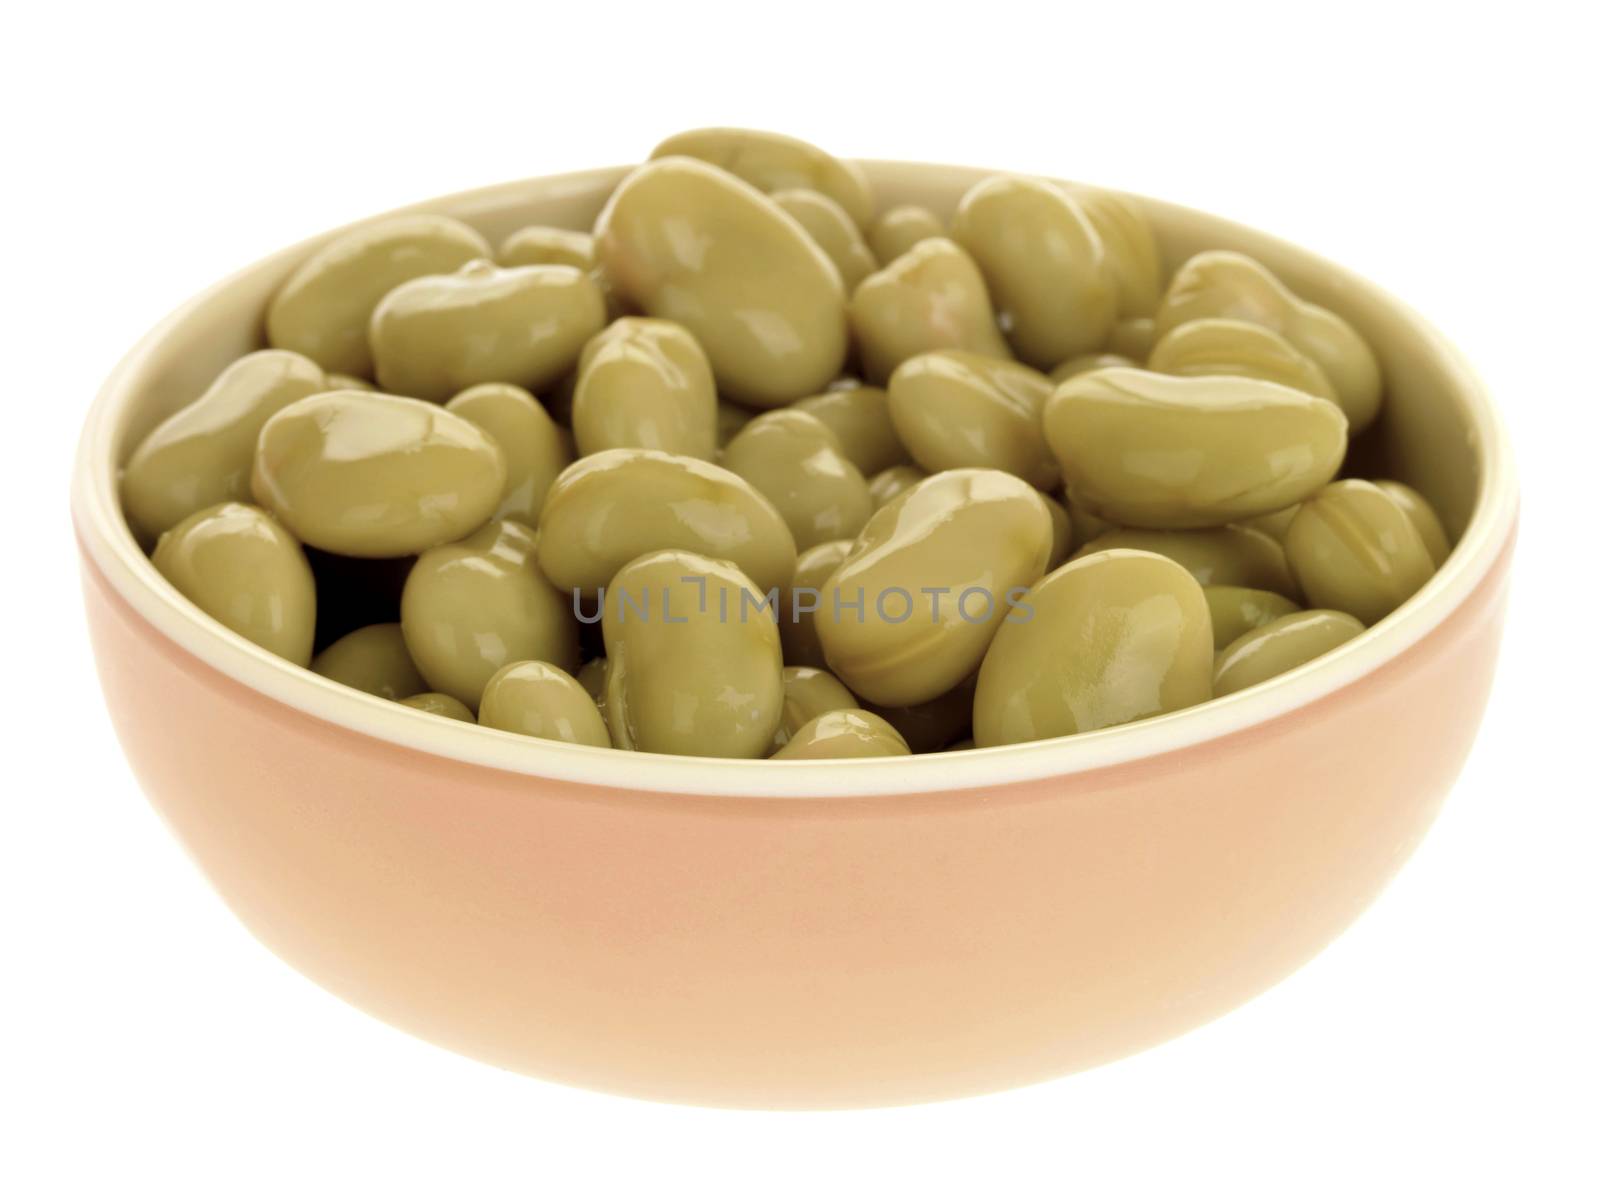 Broad Beans